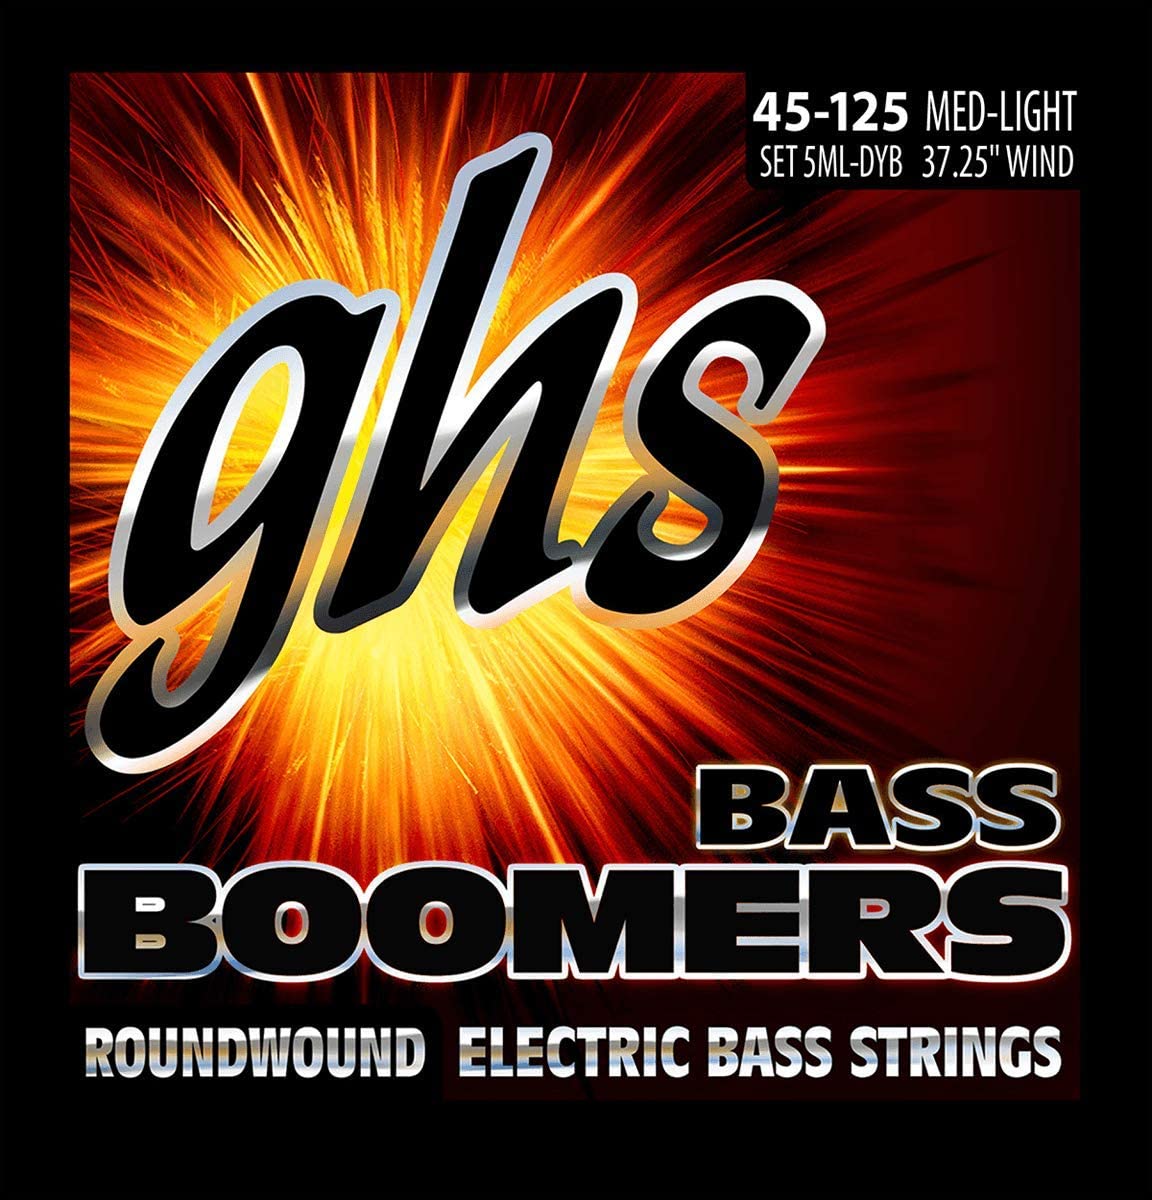 Струны для бас-гитары GHS 5ML-DYB 45-125 5-String